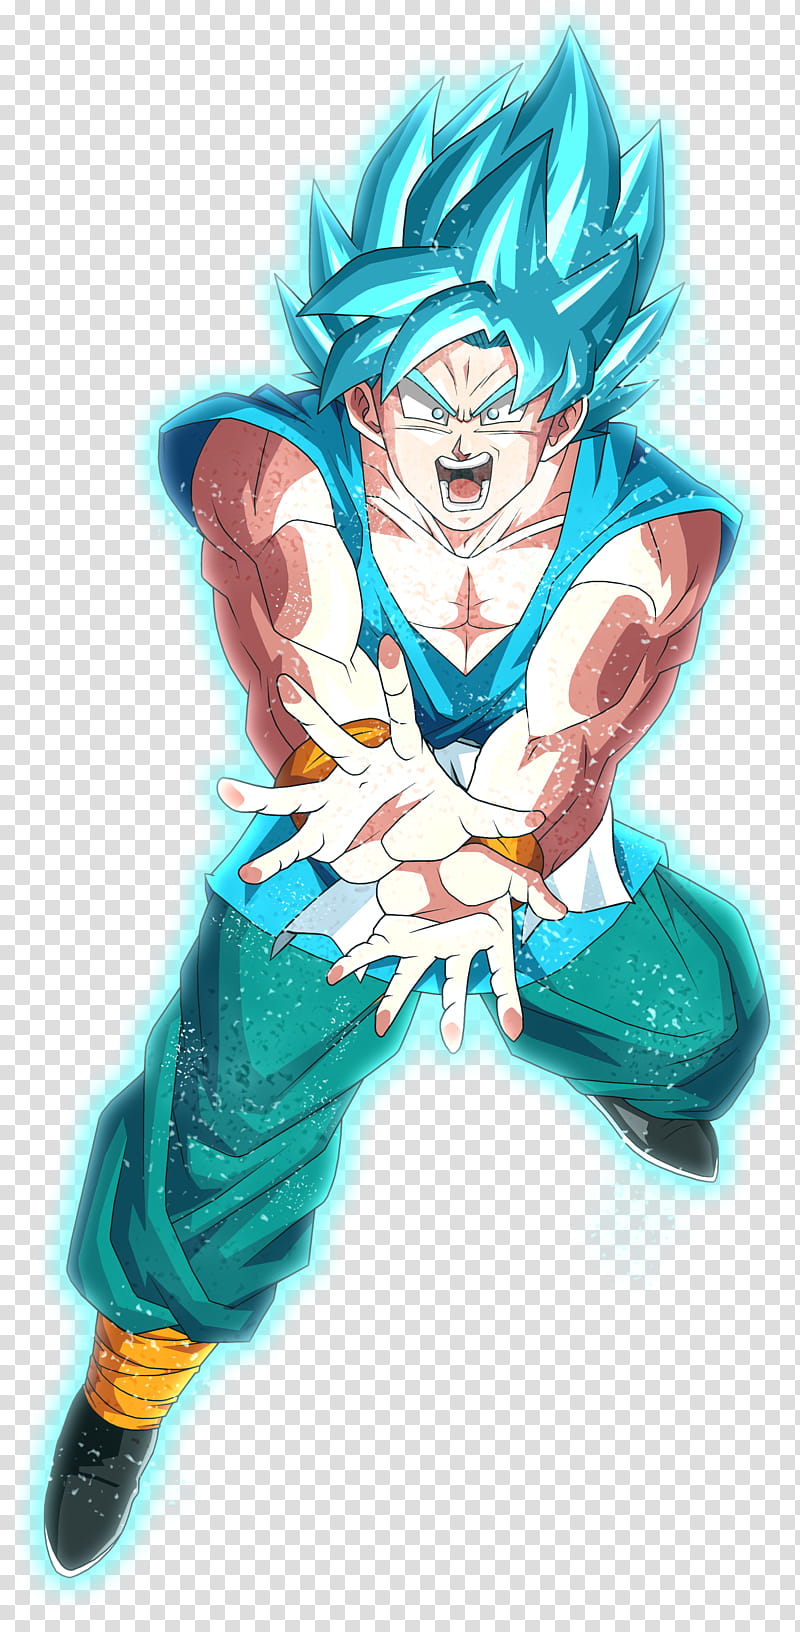 Super Saiyan Blue End of Z Goku, Son Goku Super Saiyan blue transparent background PNG clipart